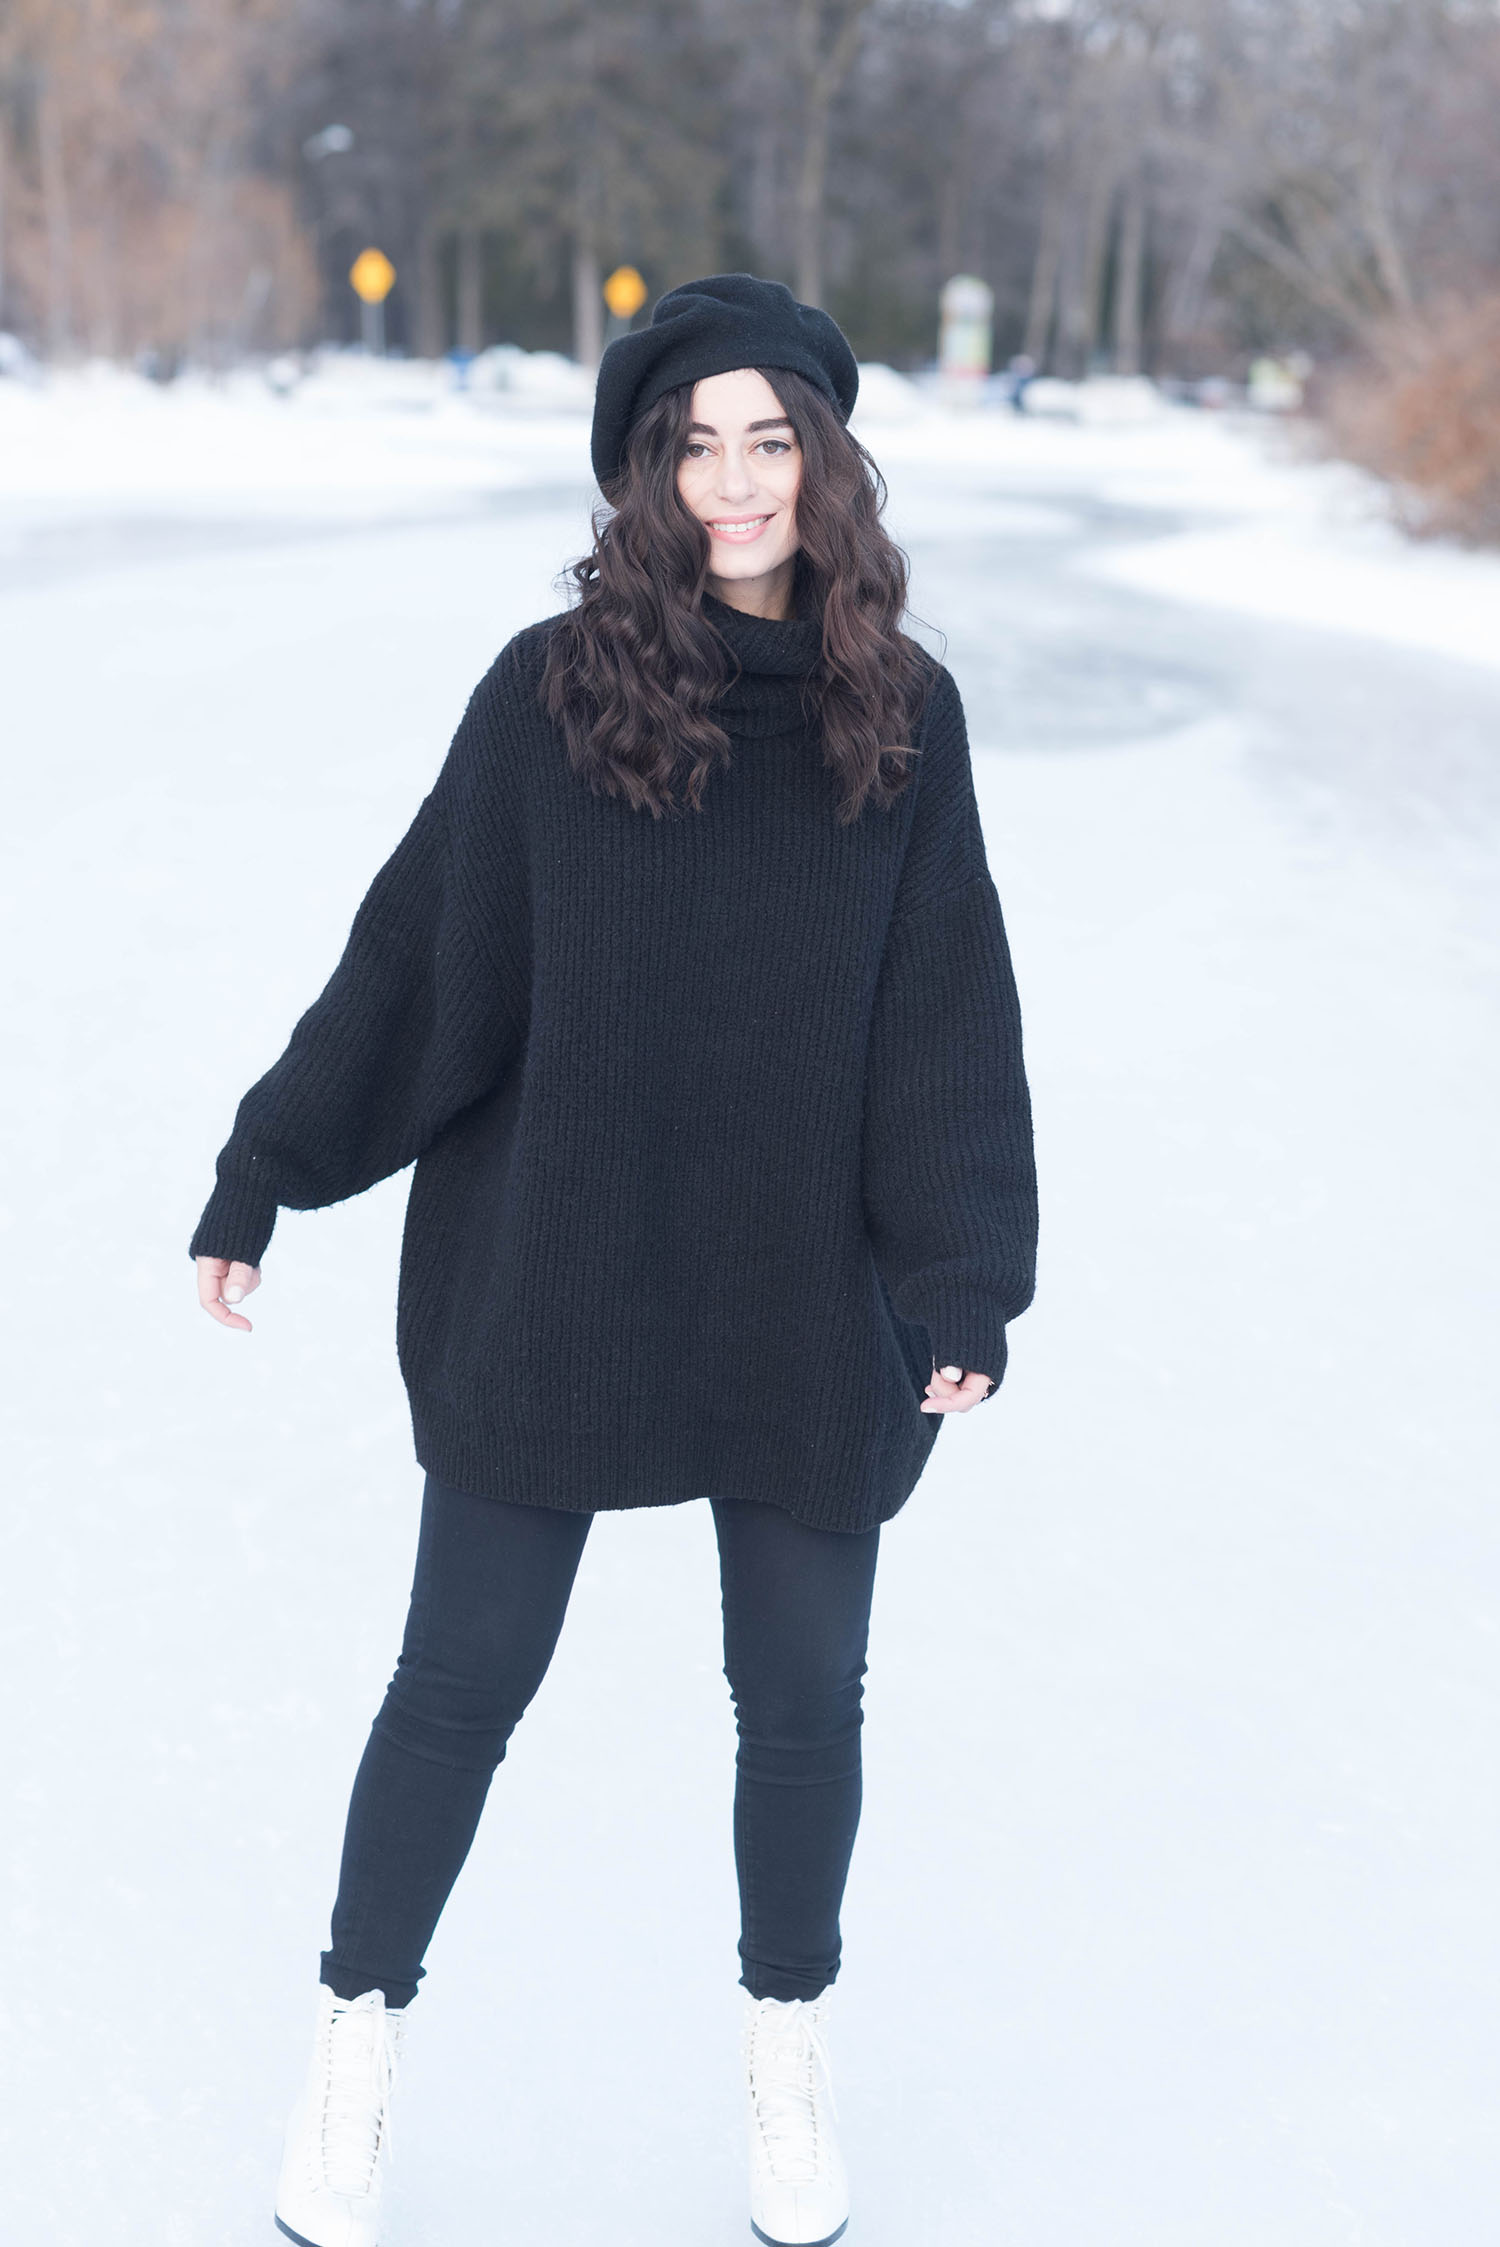 Canadian fashion blogger Cee Fardoe of Coco & Vera goes ice skating in Winnipeg wearing a black Zara sweater and black Anthropologie beret